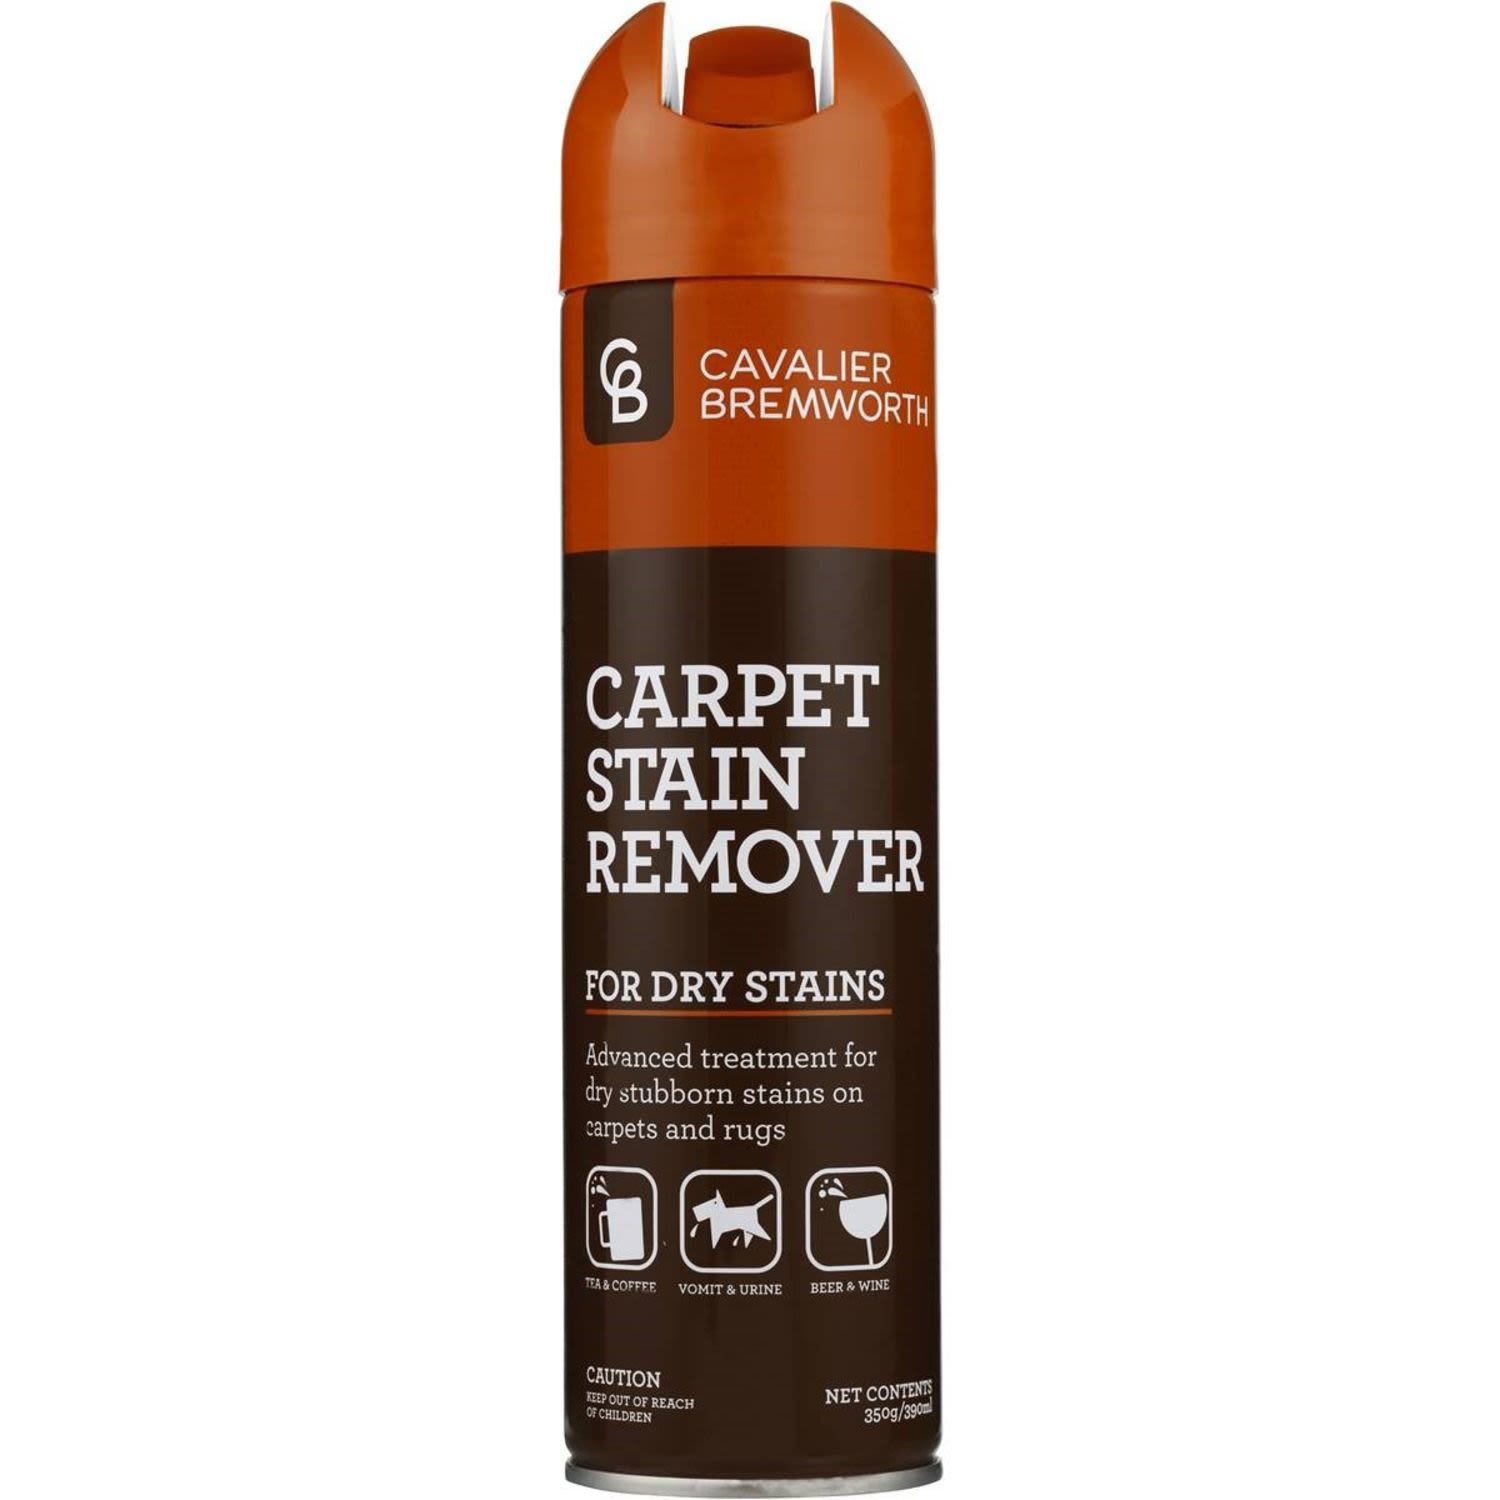 Cavalier Bremworth Floor Carpet Stain Remover, 350 Gram